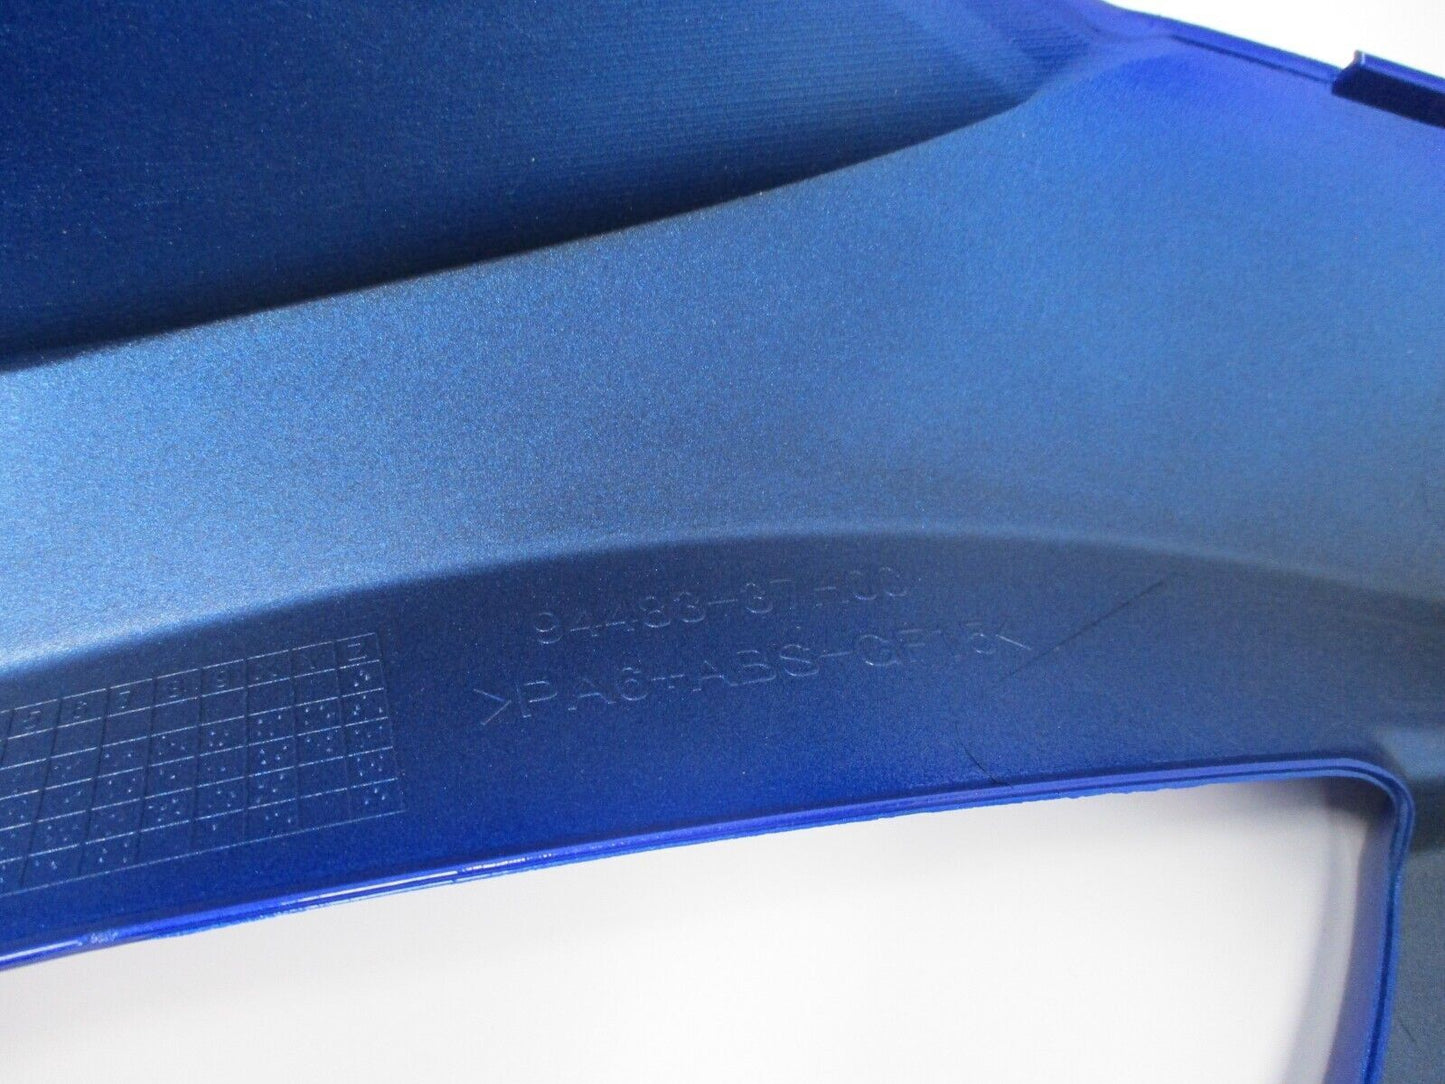 Suzuki OEM Blue Left Cowling for '08 GSX-R750 94440-38H00-YKY